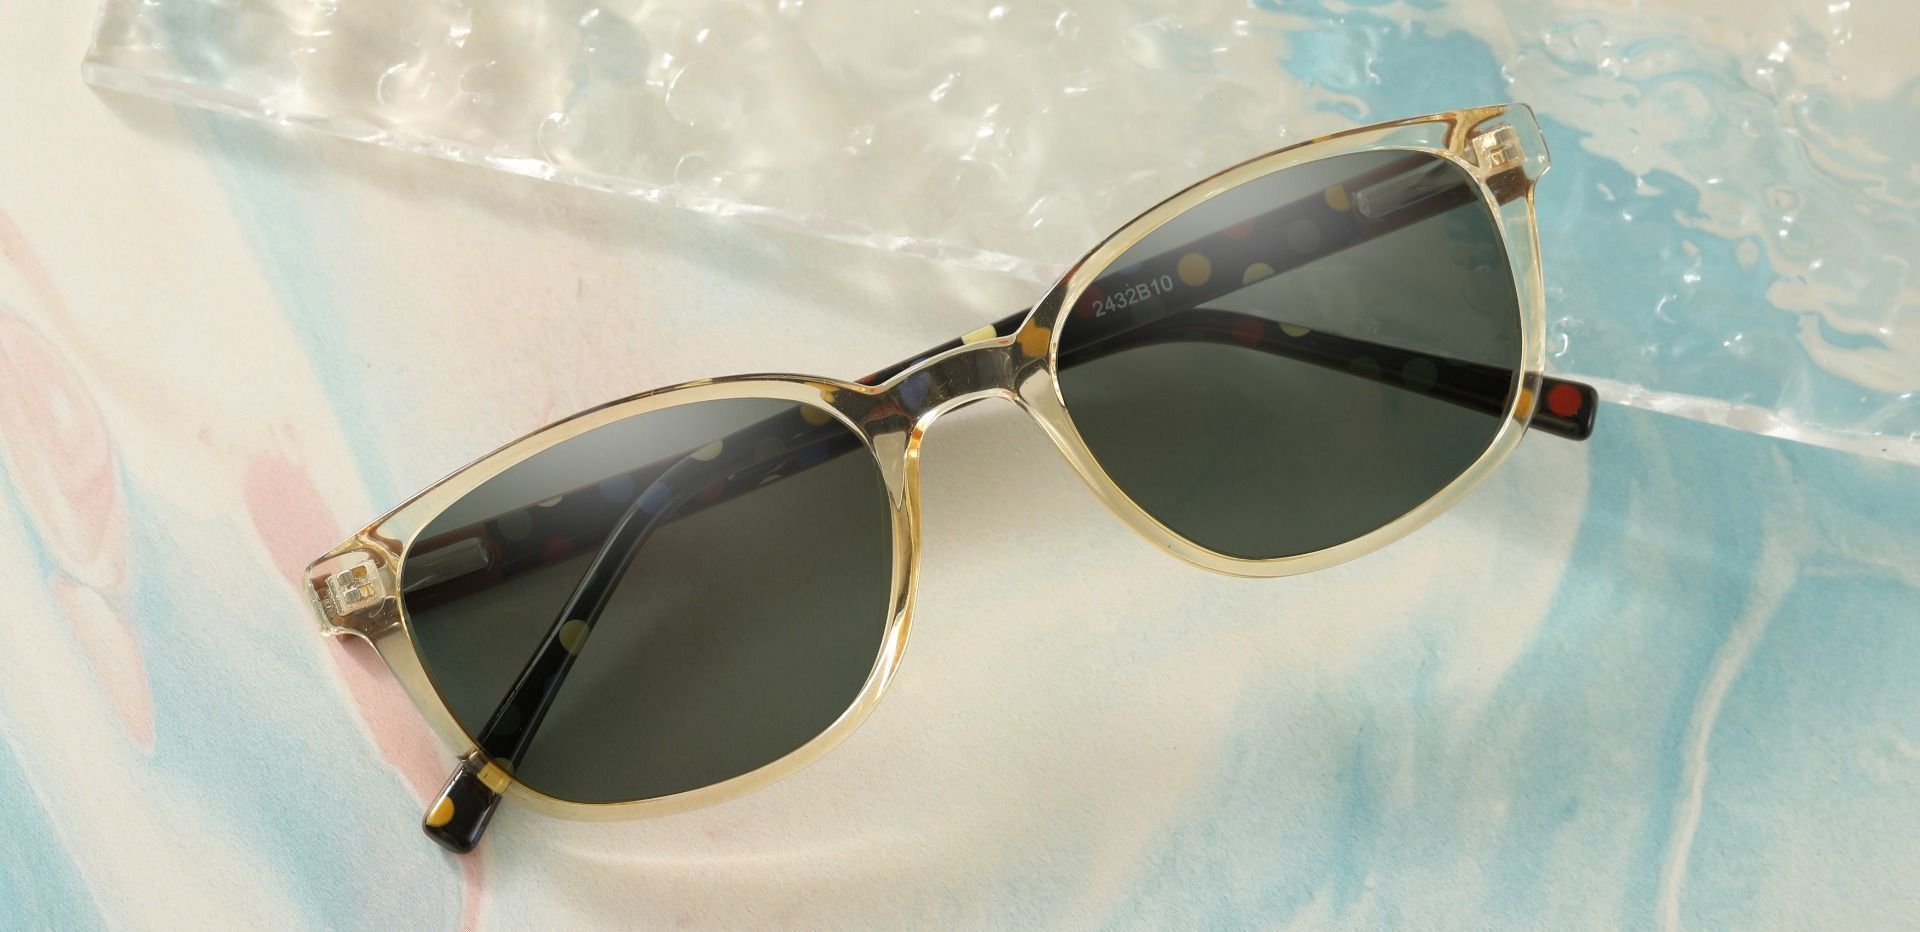 Branson Rectangle Prescription Sunglasses - Brown Frame With Green Lenses